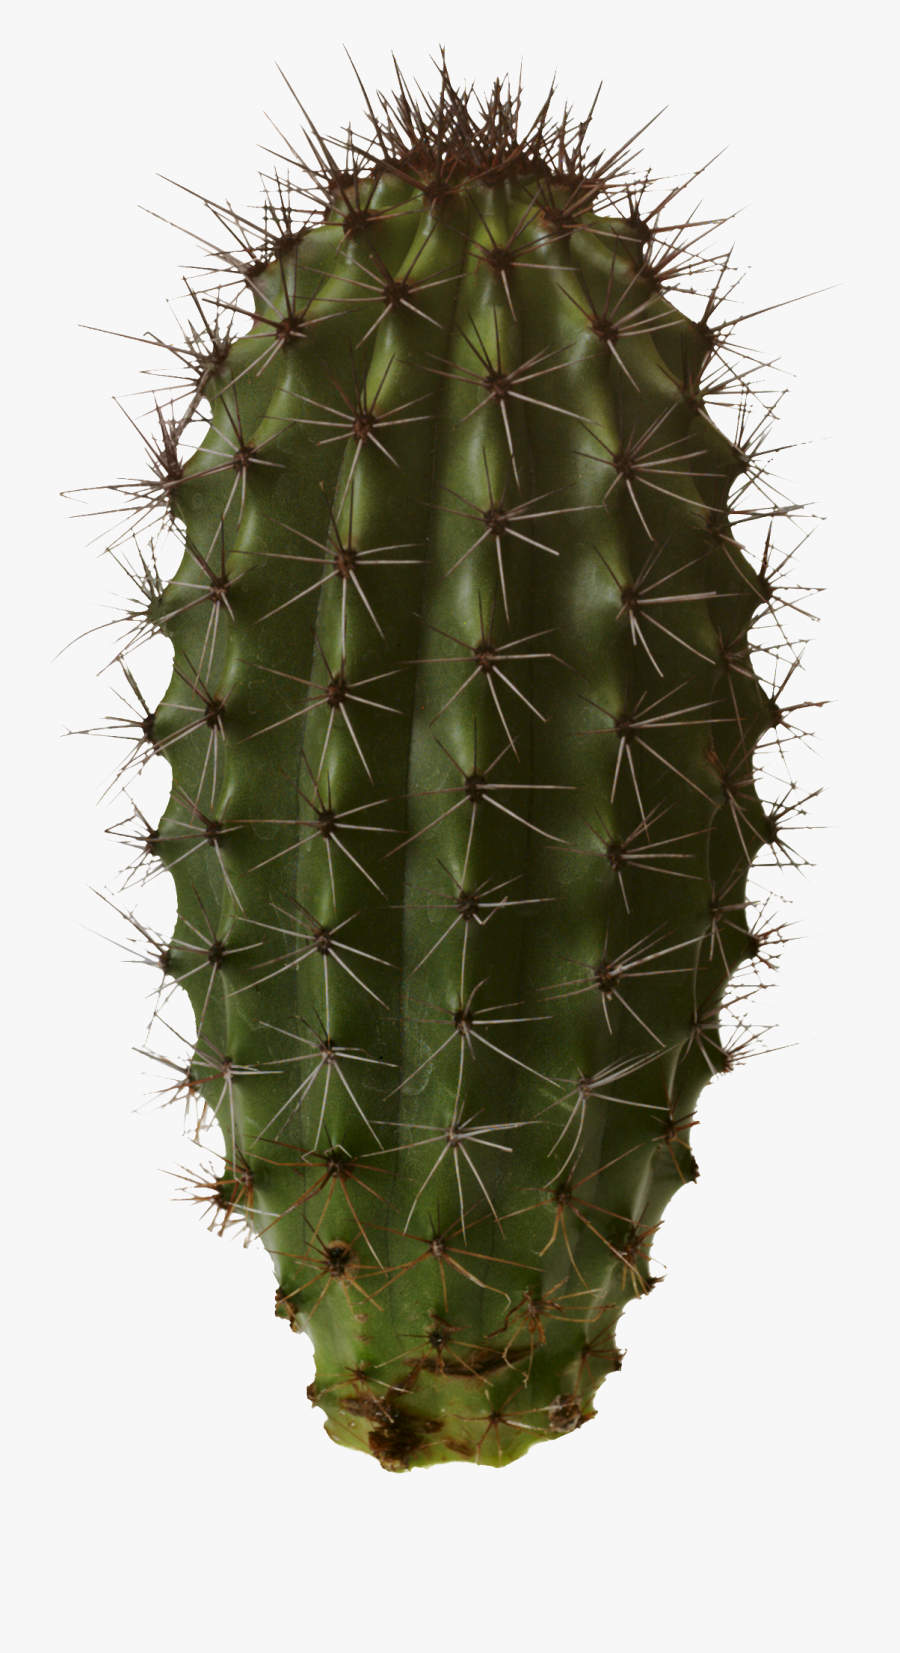 Cactus Png Image - Cactus Png, Transparent Clipart